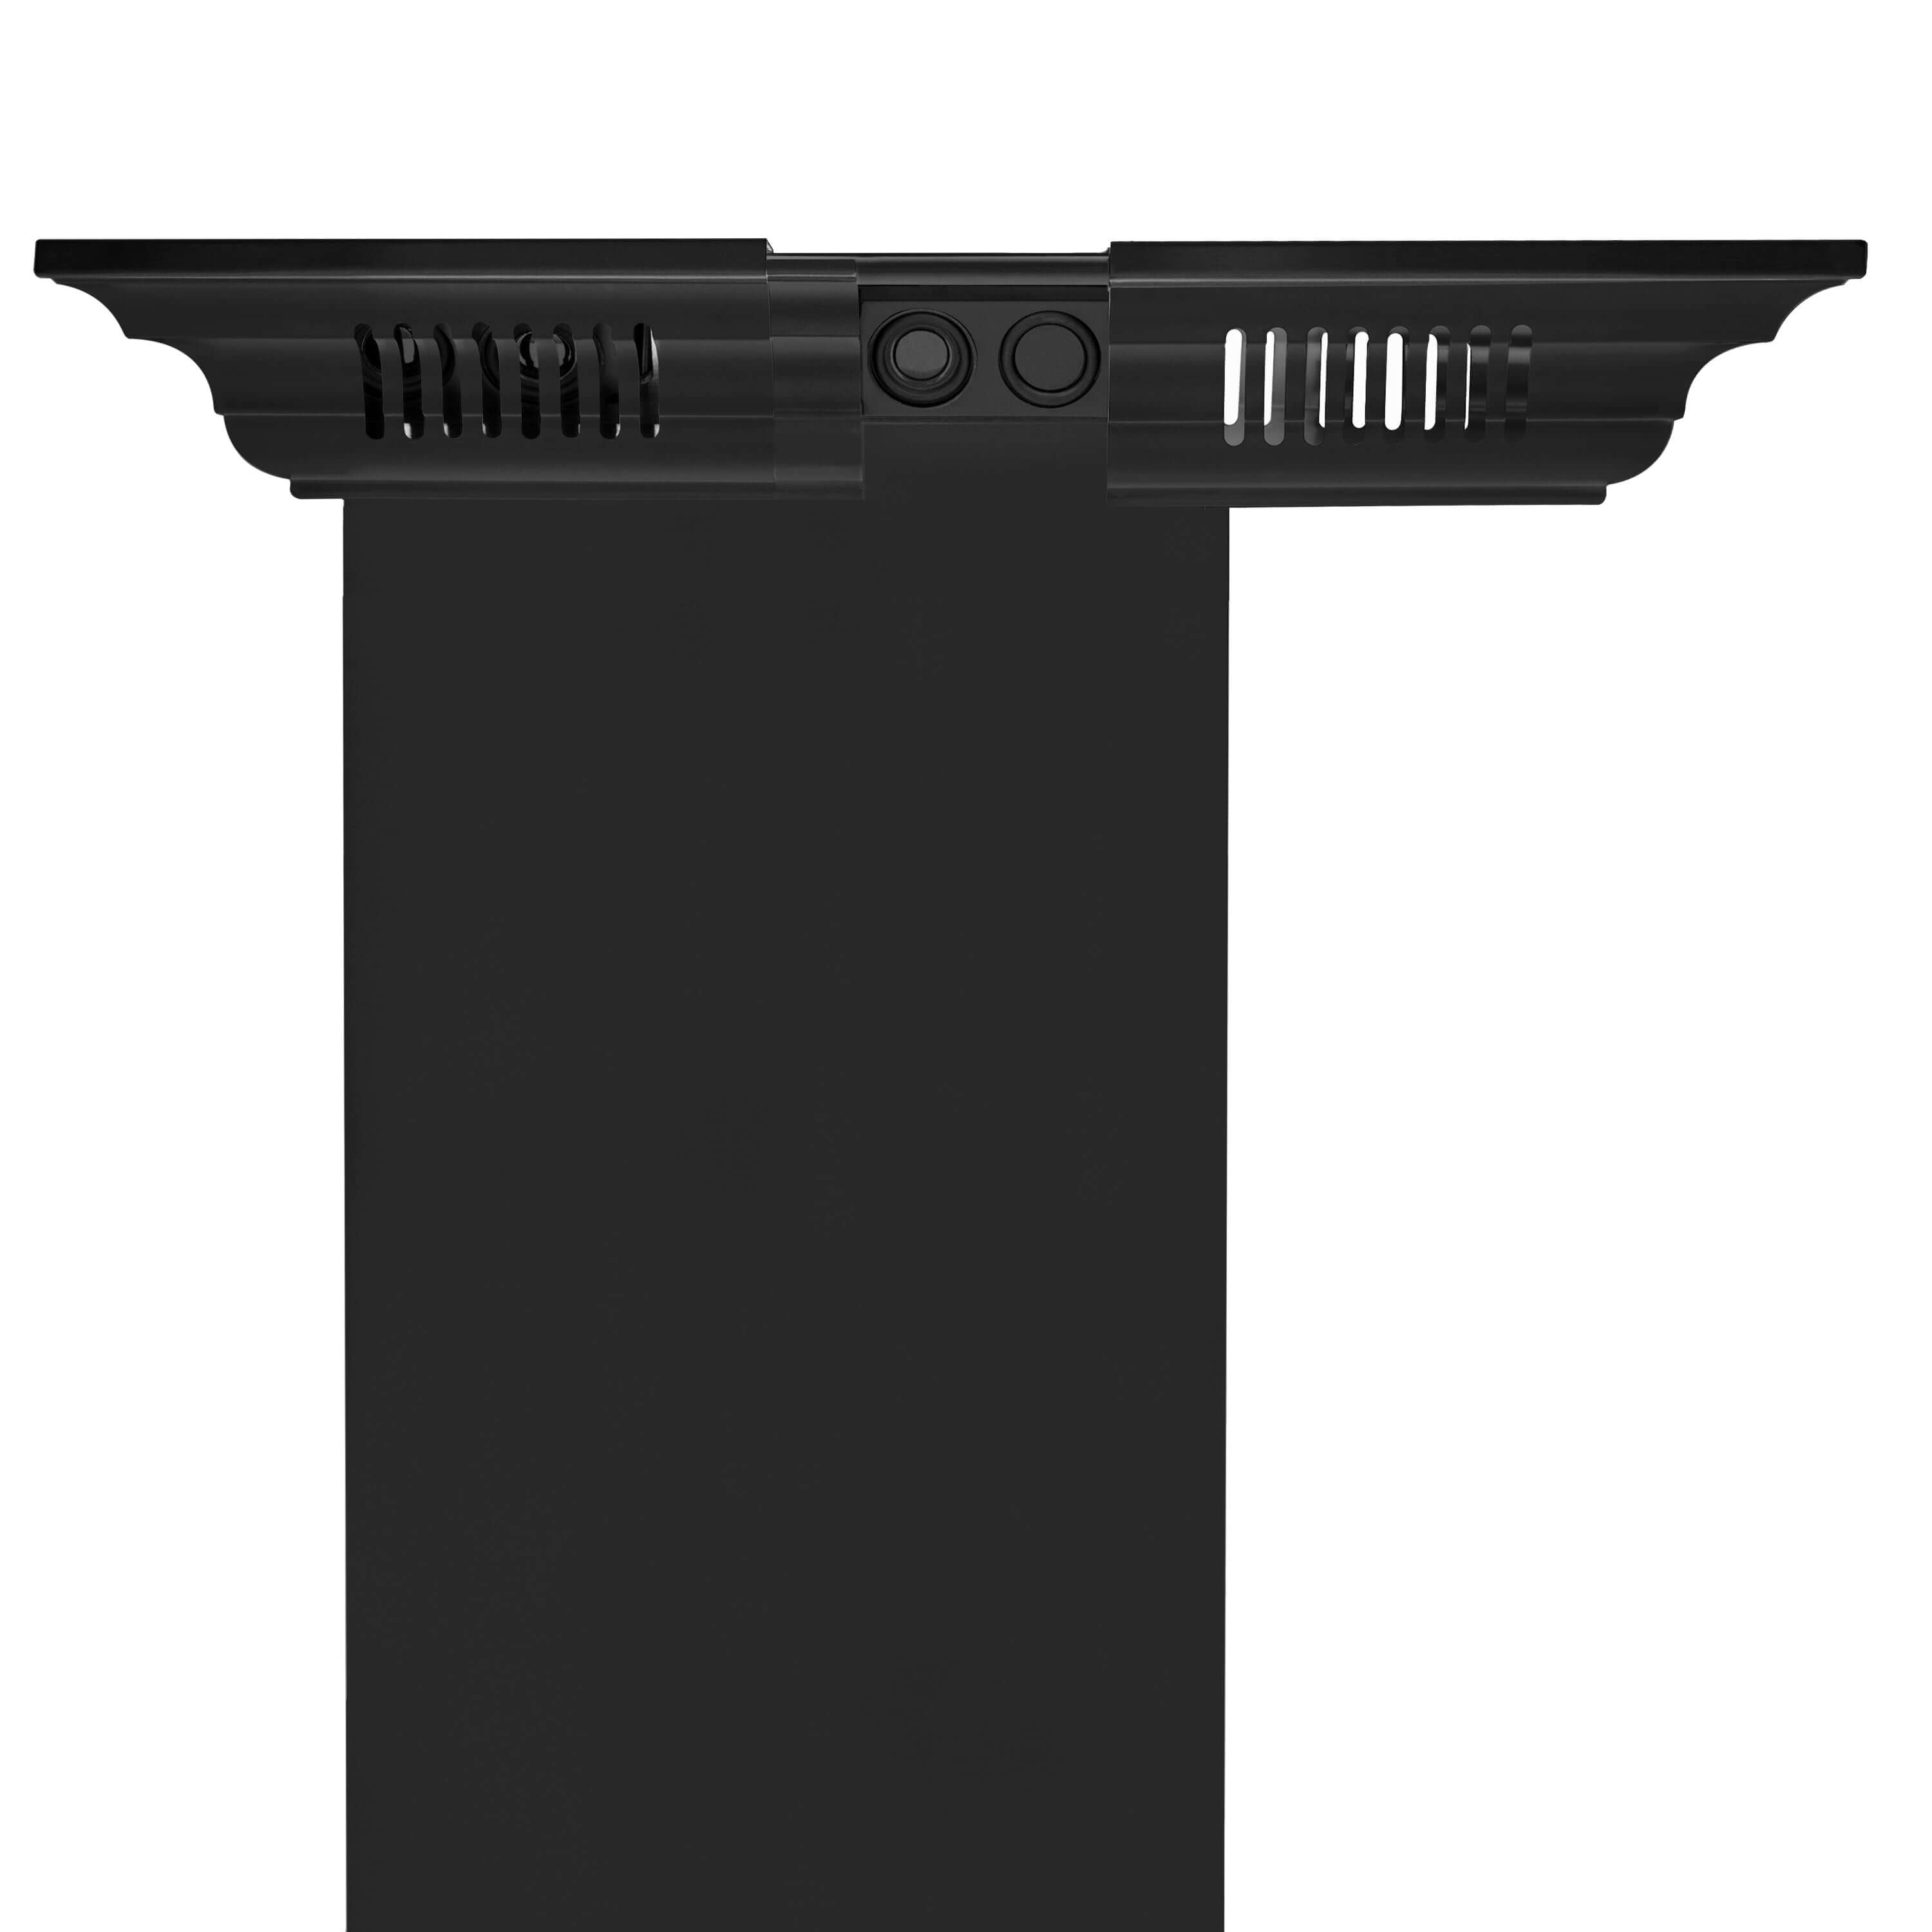 ZLINE Crown Molding in Black Stainless Steel with Built-in Bluetooth Speakers (CM6-BT-BSGL2iN)